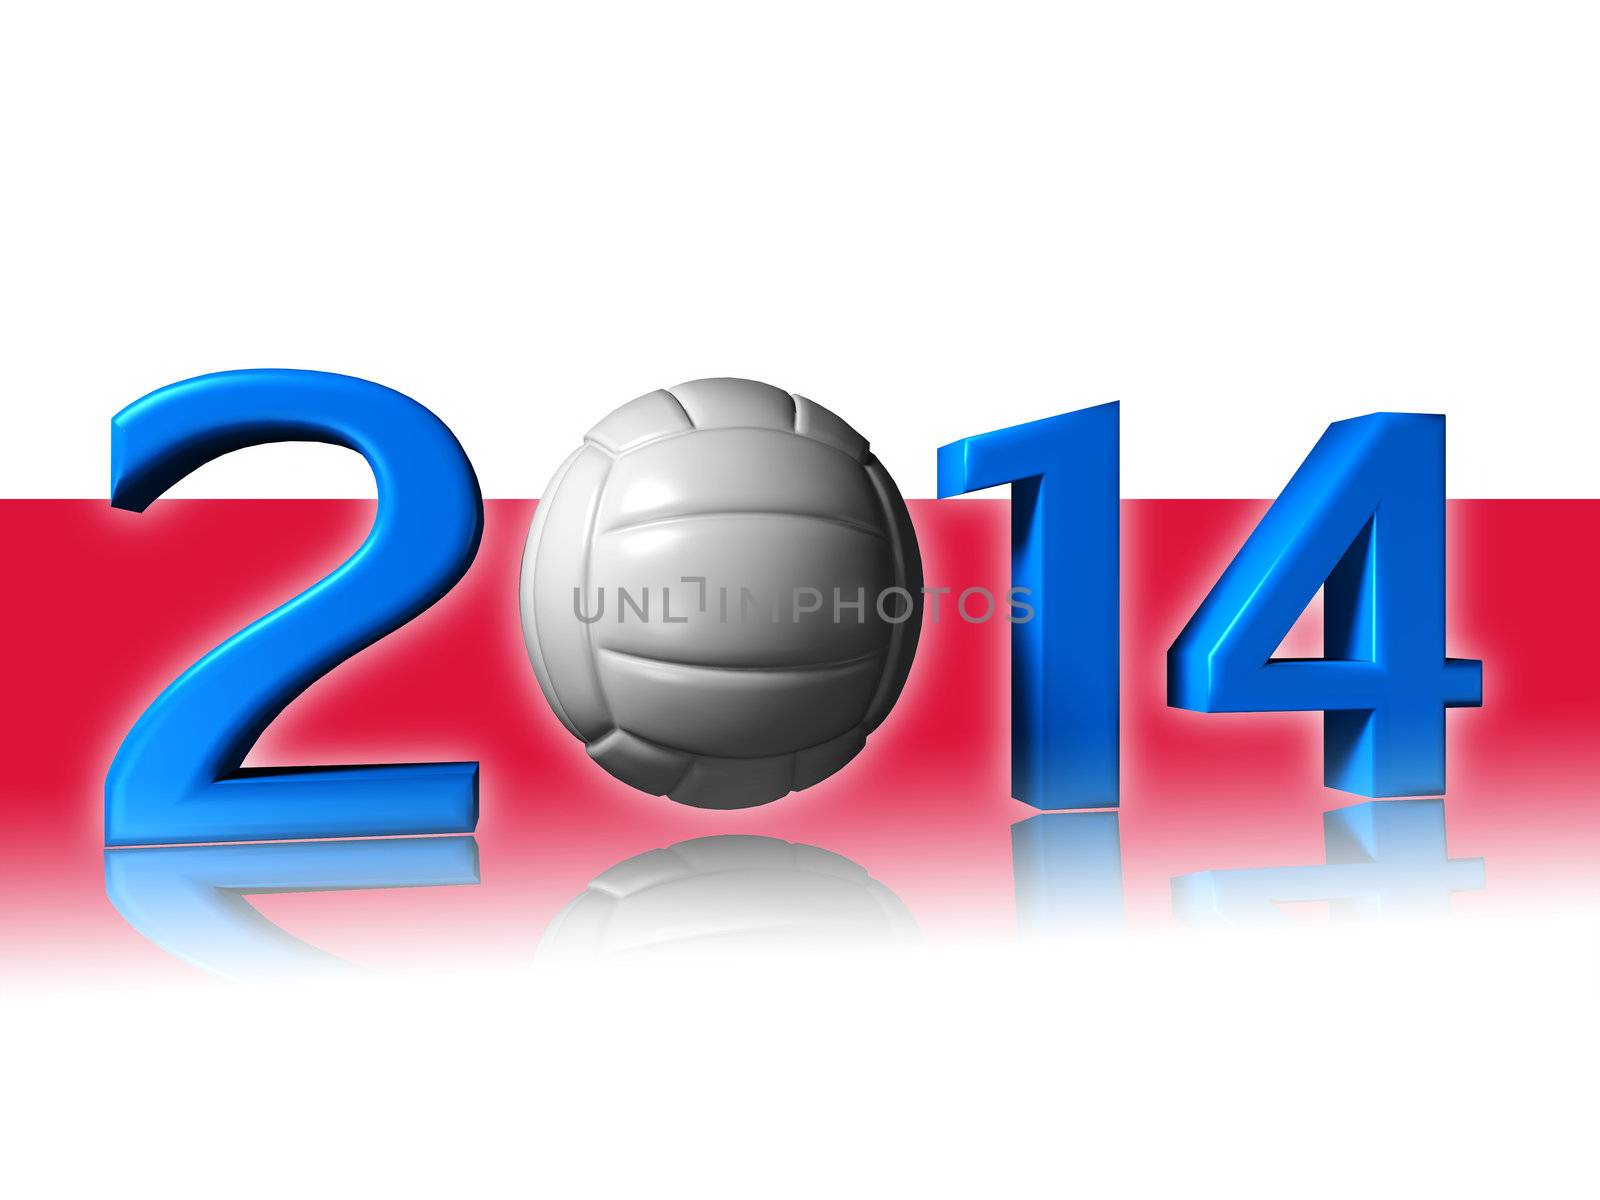 Big 2014 volleyball logo with polish flag by shkyo30